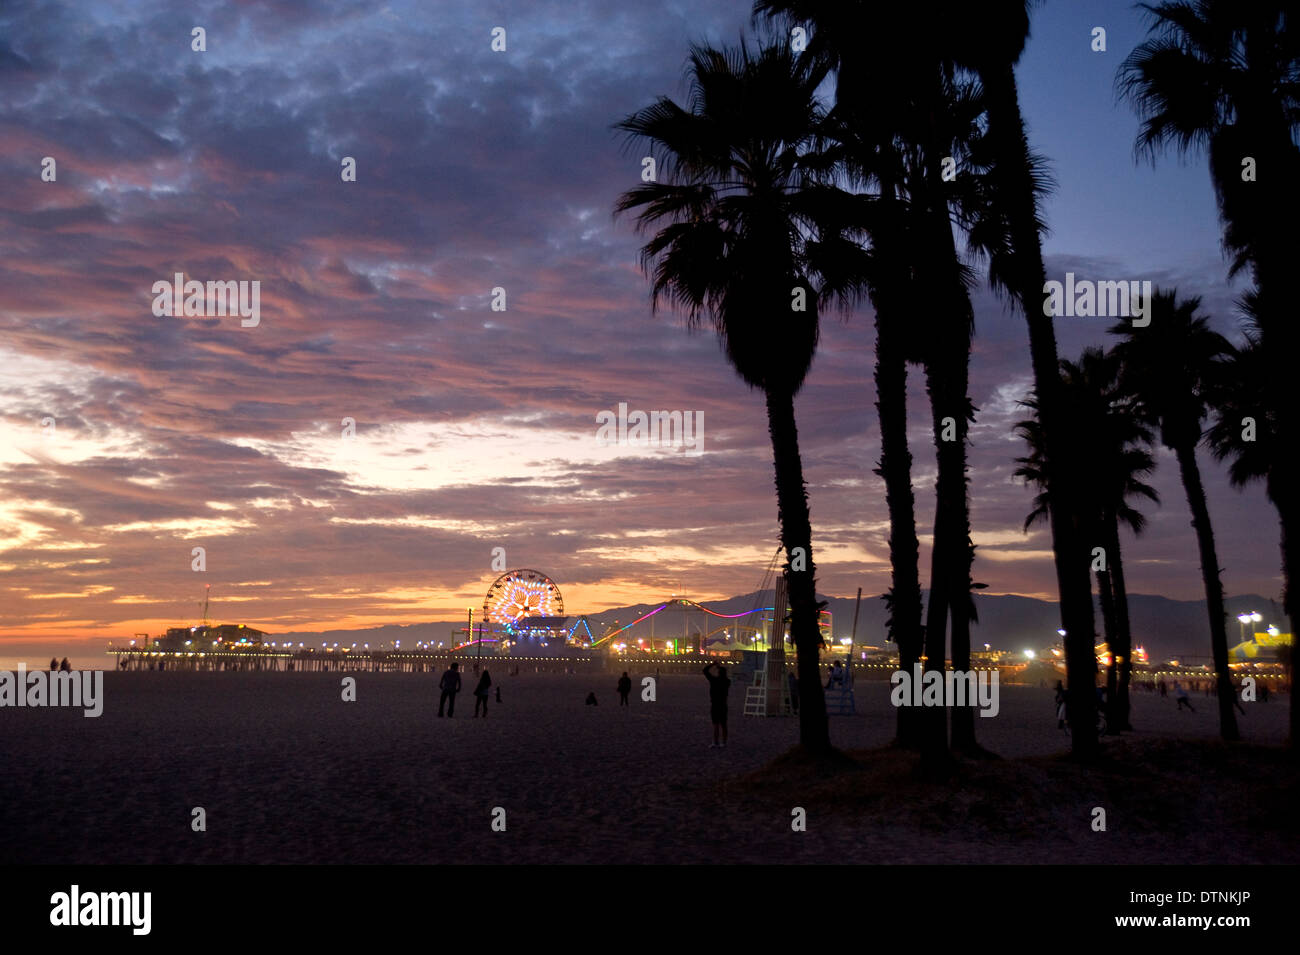 The Santa Monica pier at sunset, Los Angeles, CA, USA Stock Photo